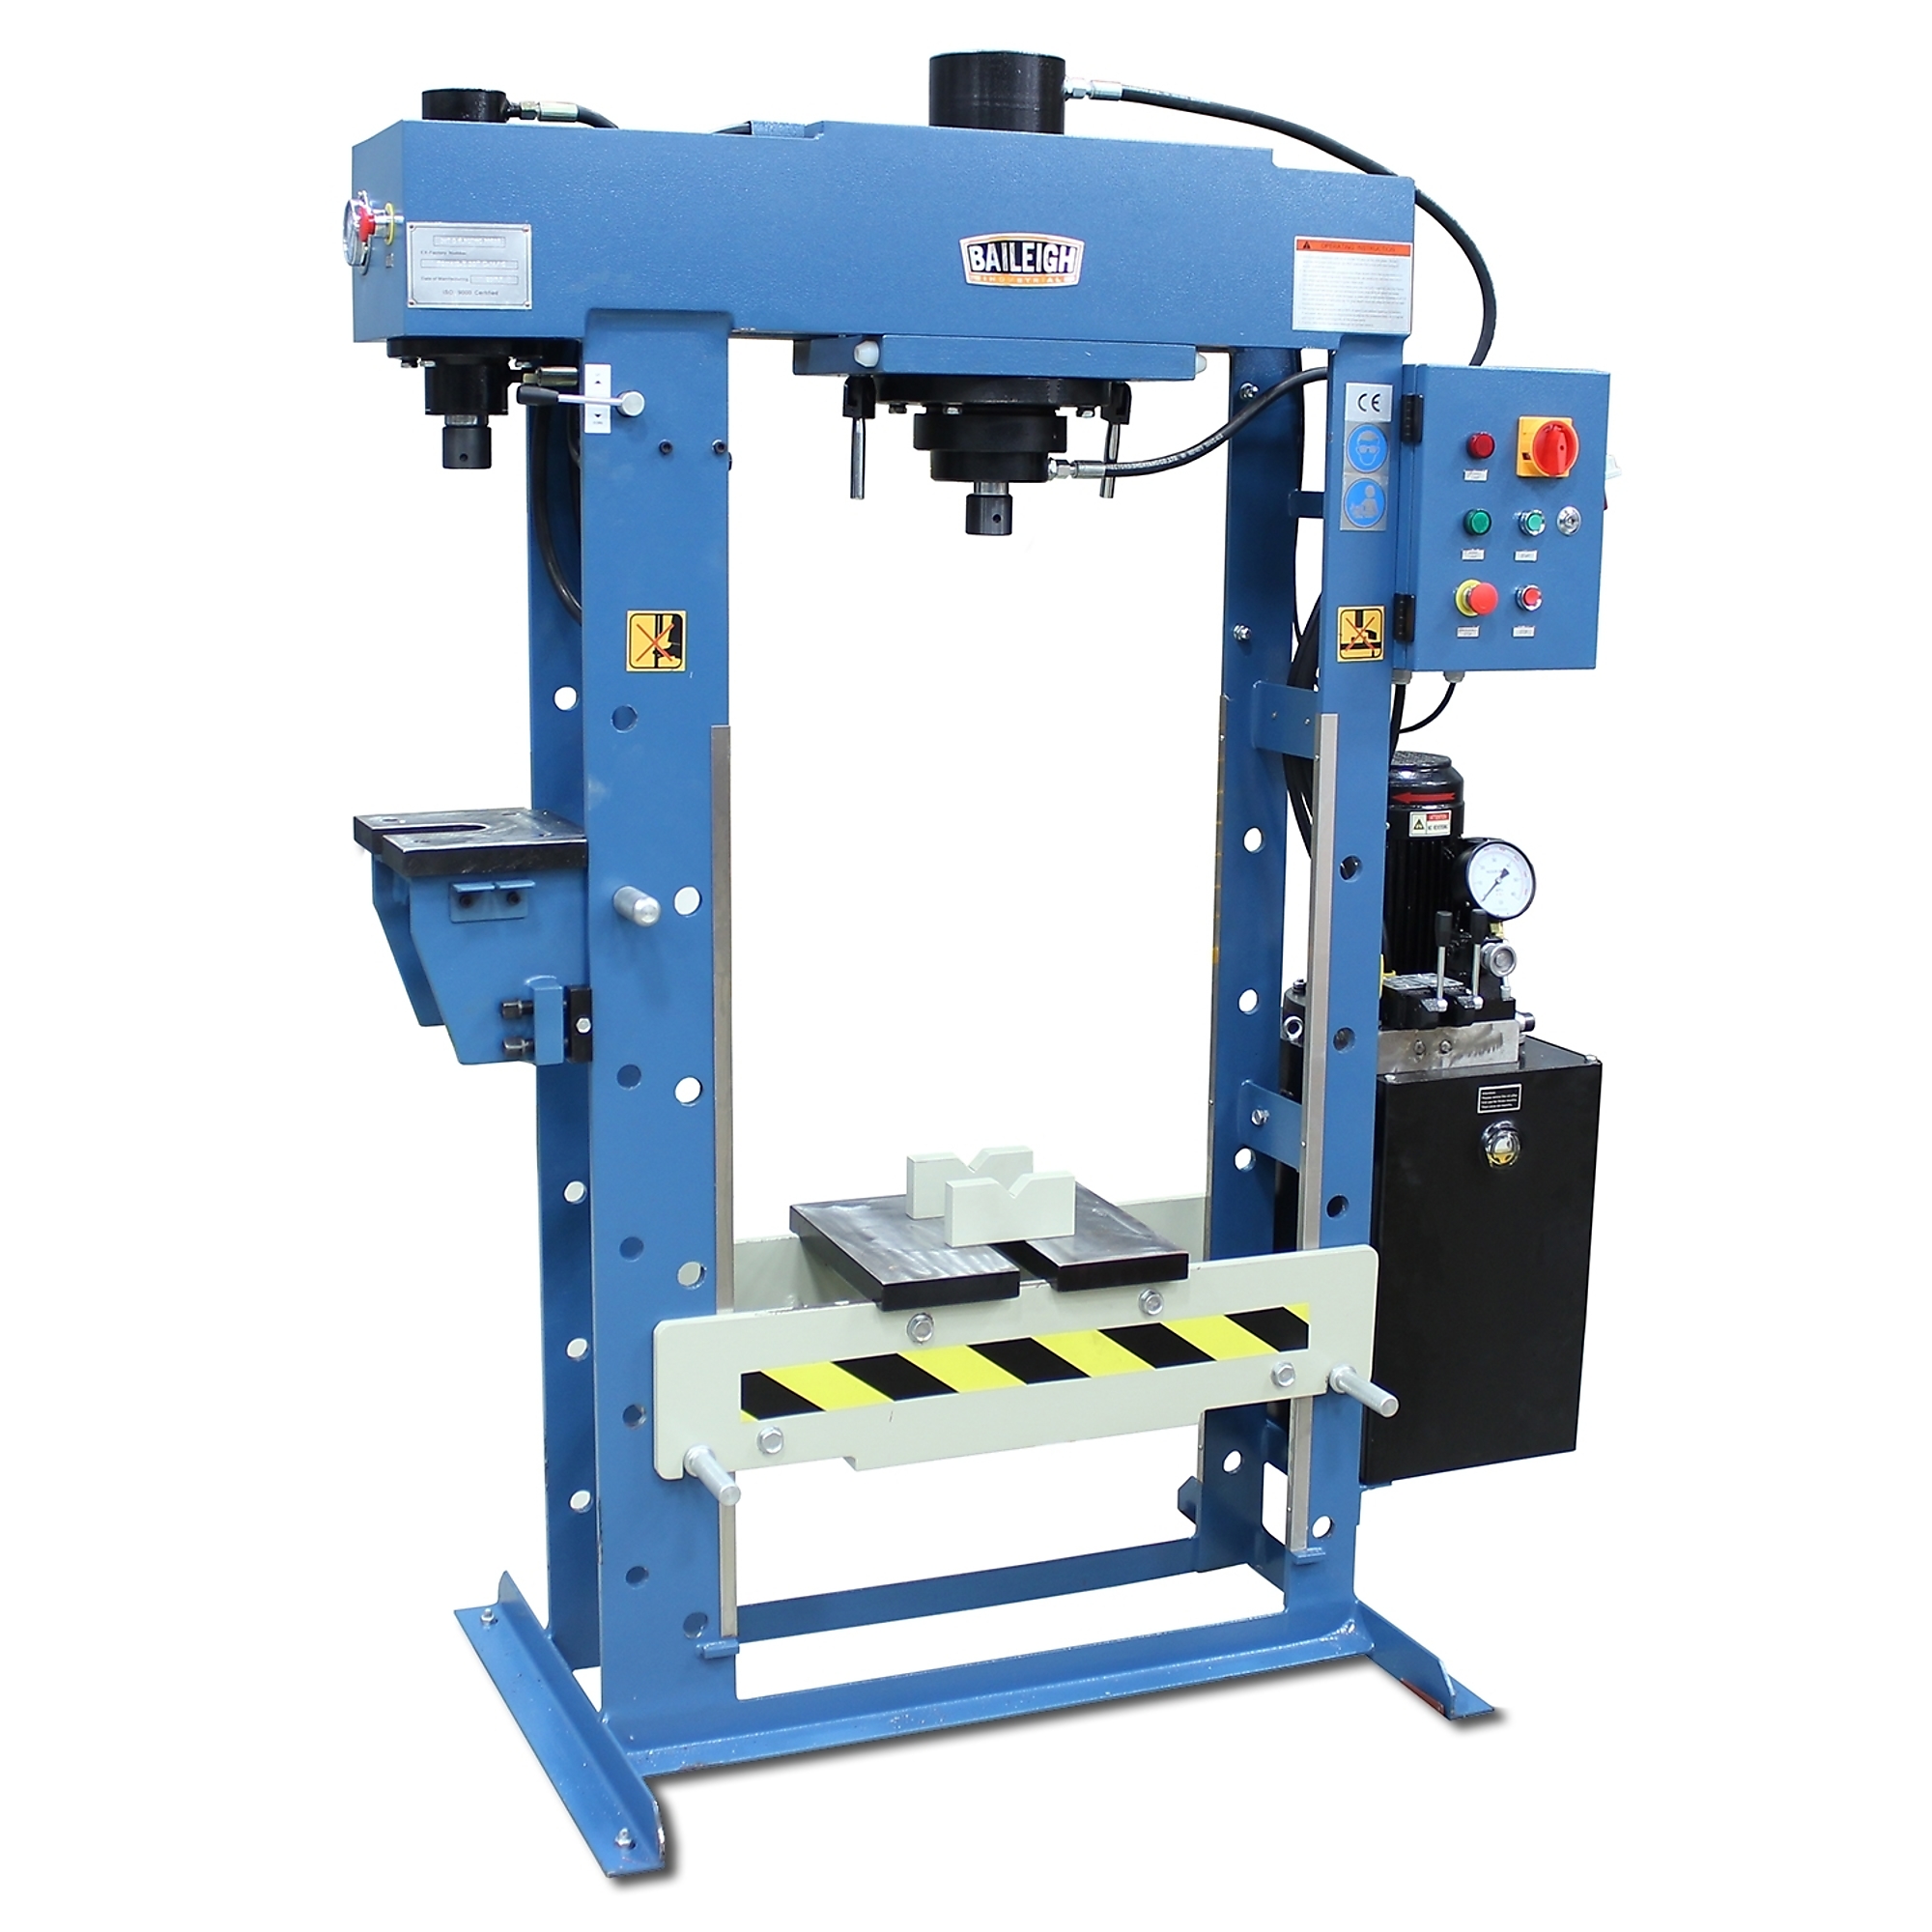 Baileigh, Hydraulic Press, Press Type Hydraulic, Max. Pressure 30 Tons, Model HSP-30M-C